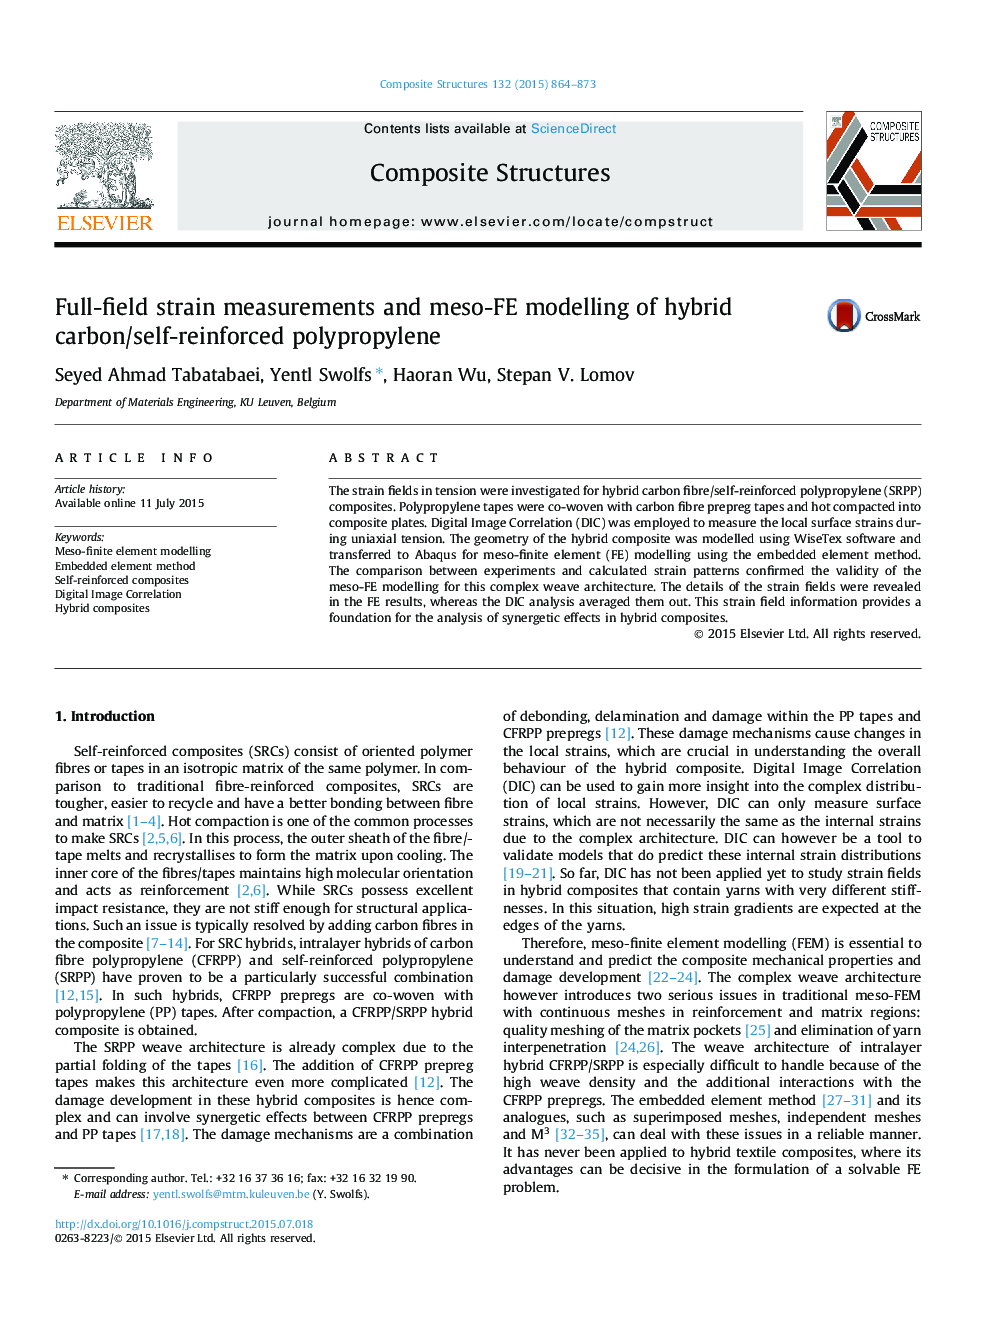 Full-field strain measurements and meso-FE modelling of hybrid carbon/self-reinforced polypropylene